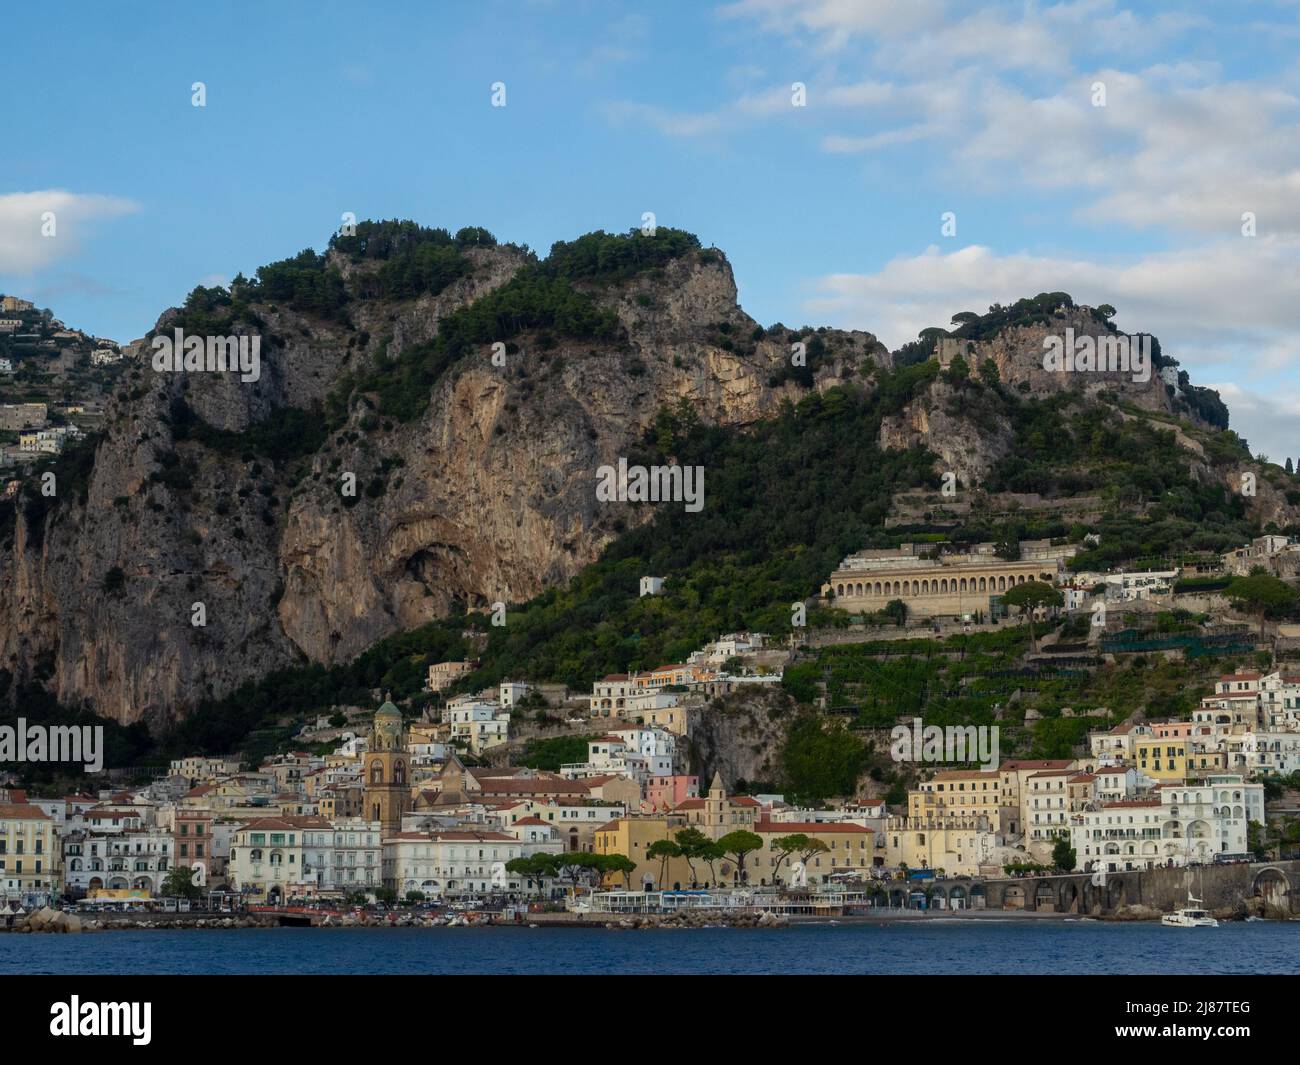 Amalfi seen from the sea Stock Photo